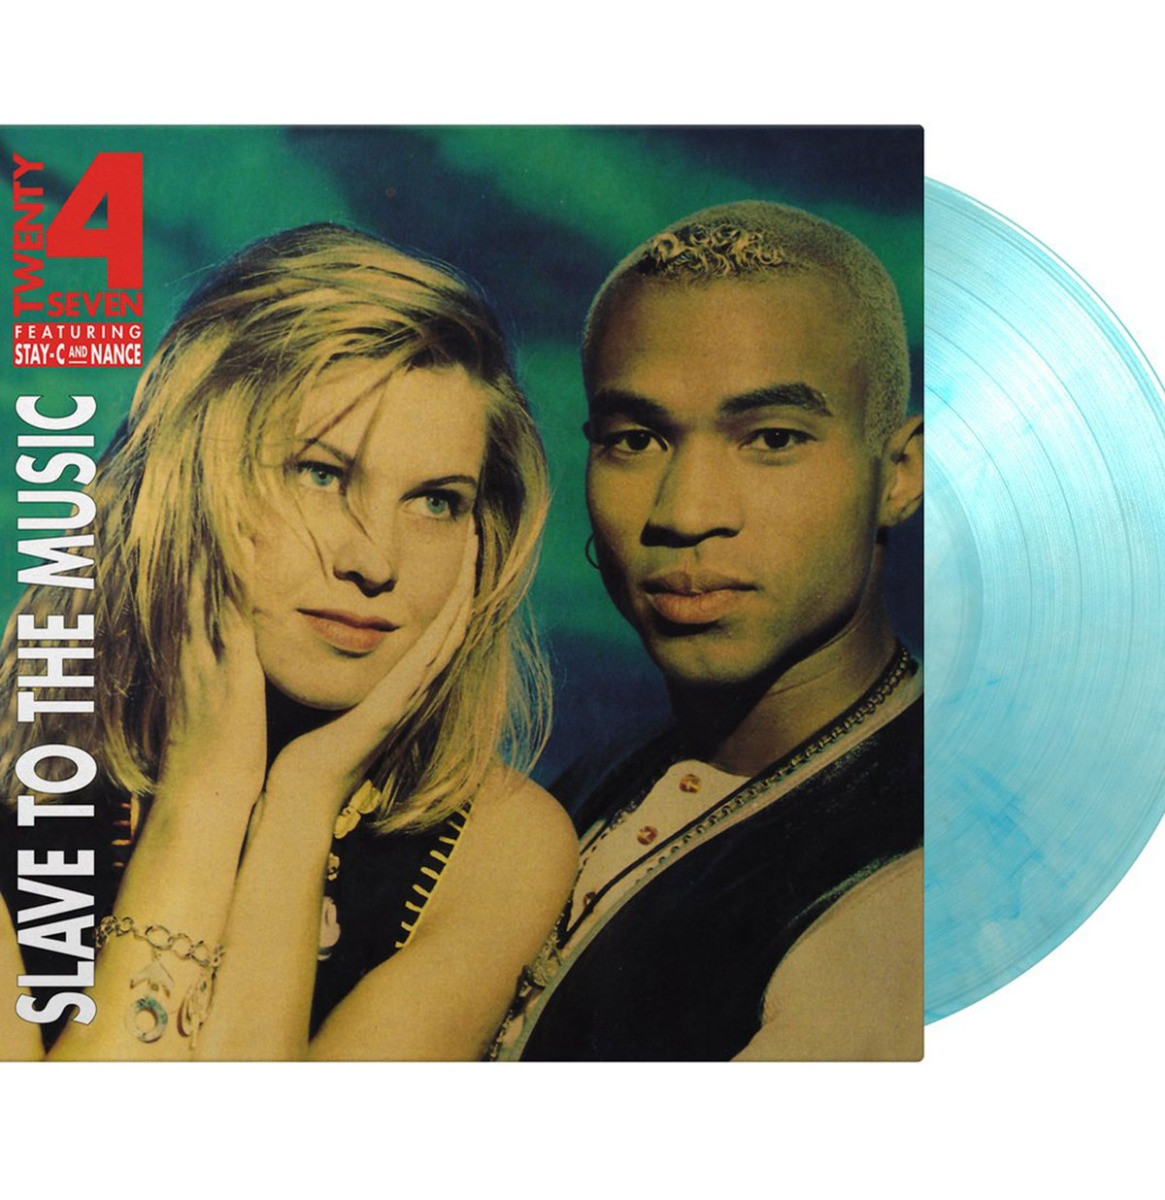 Twenty 4 Seven Featuring Stay-C And Nance - Slave To The Music (Gekleurd Vinyl) LP